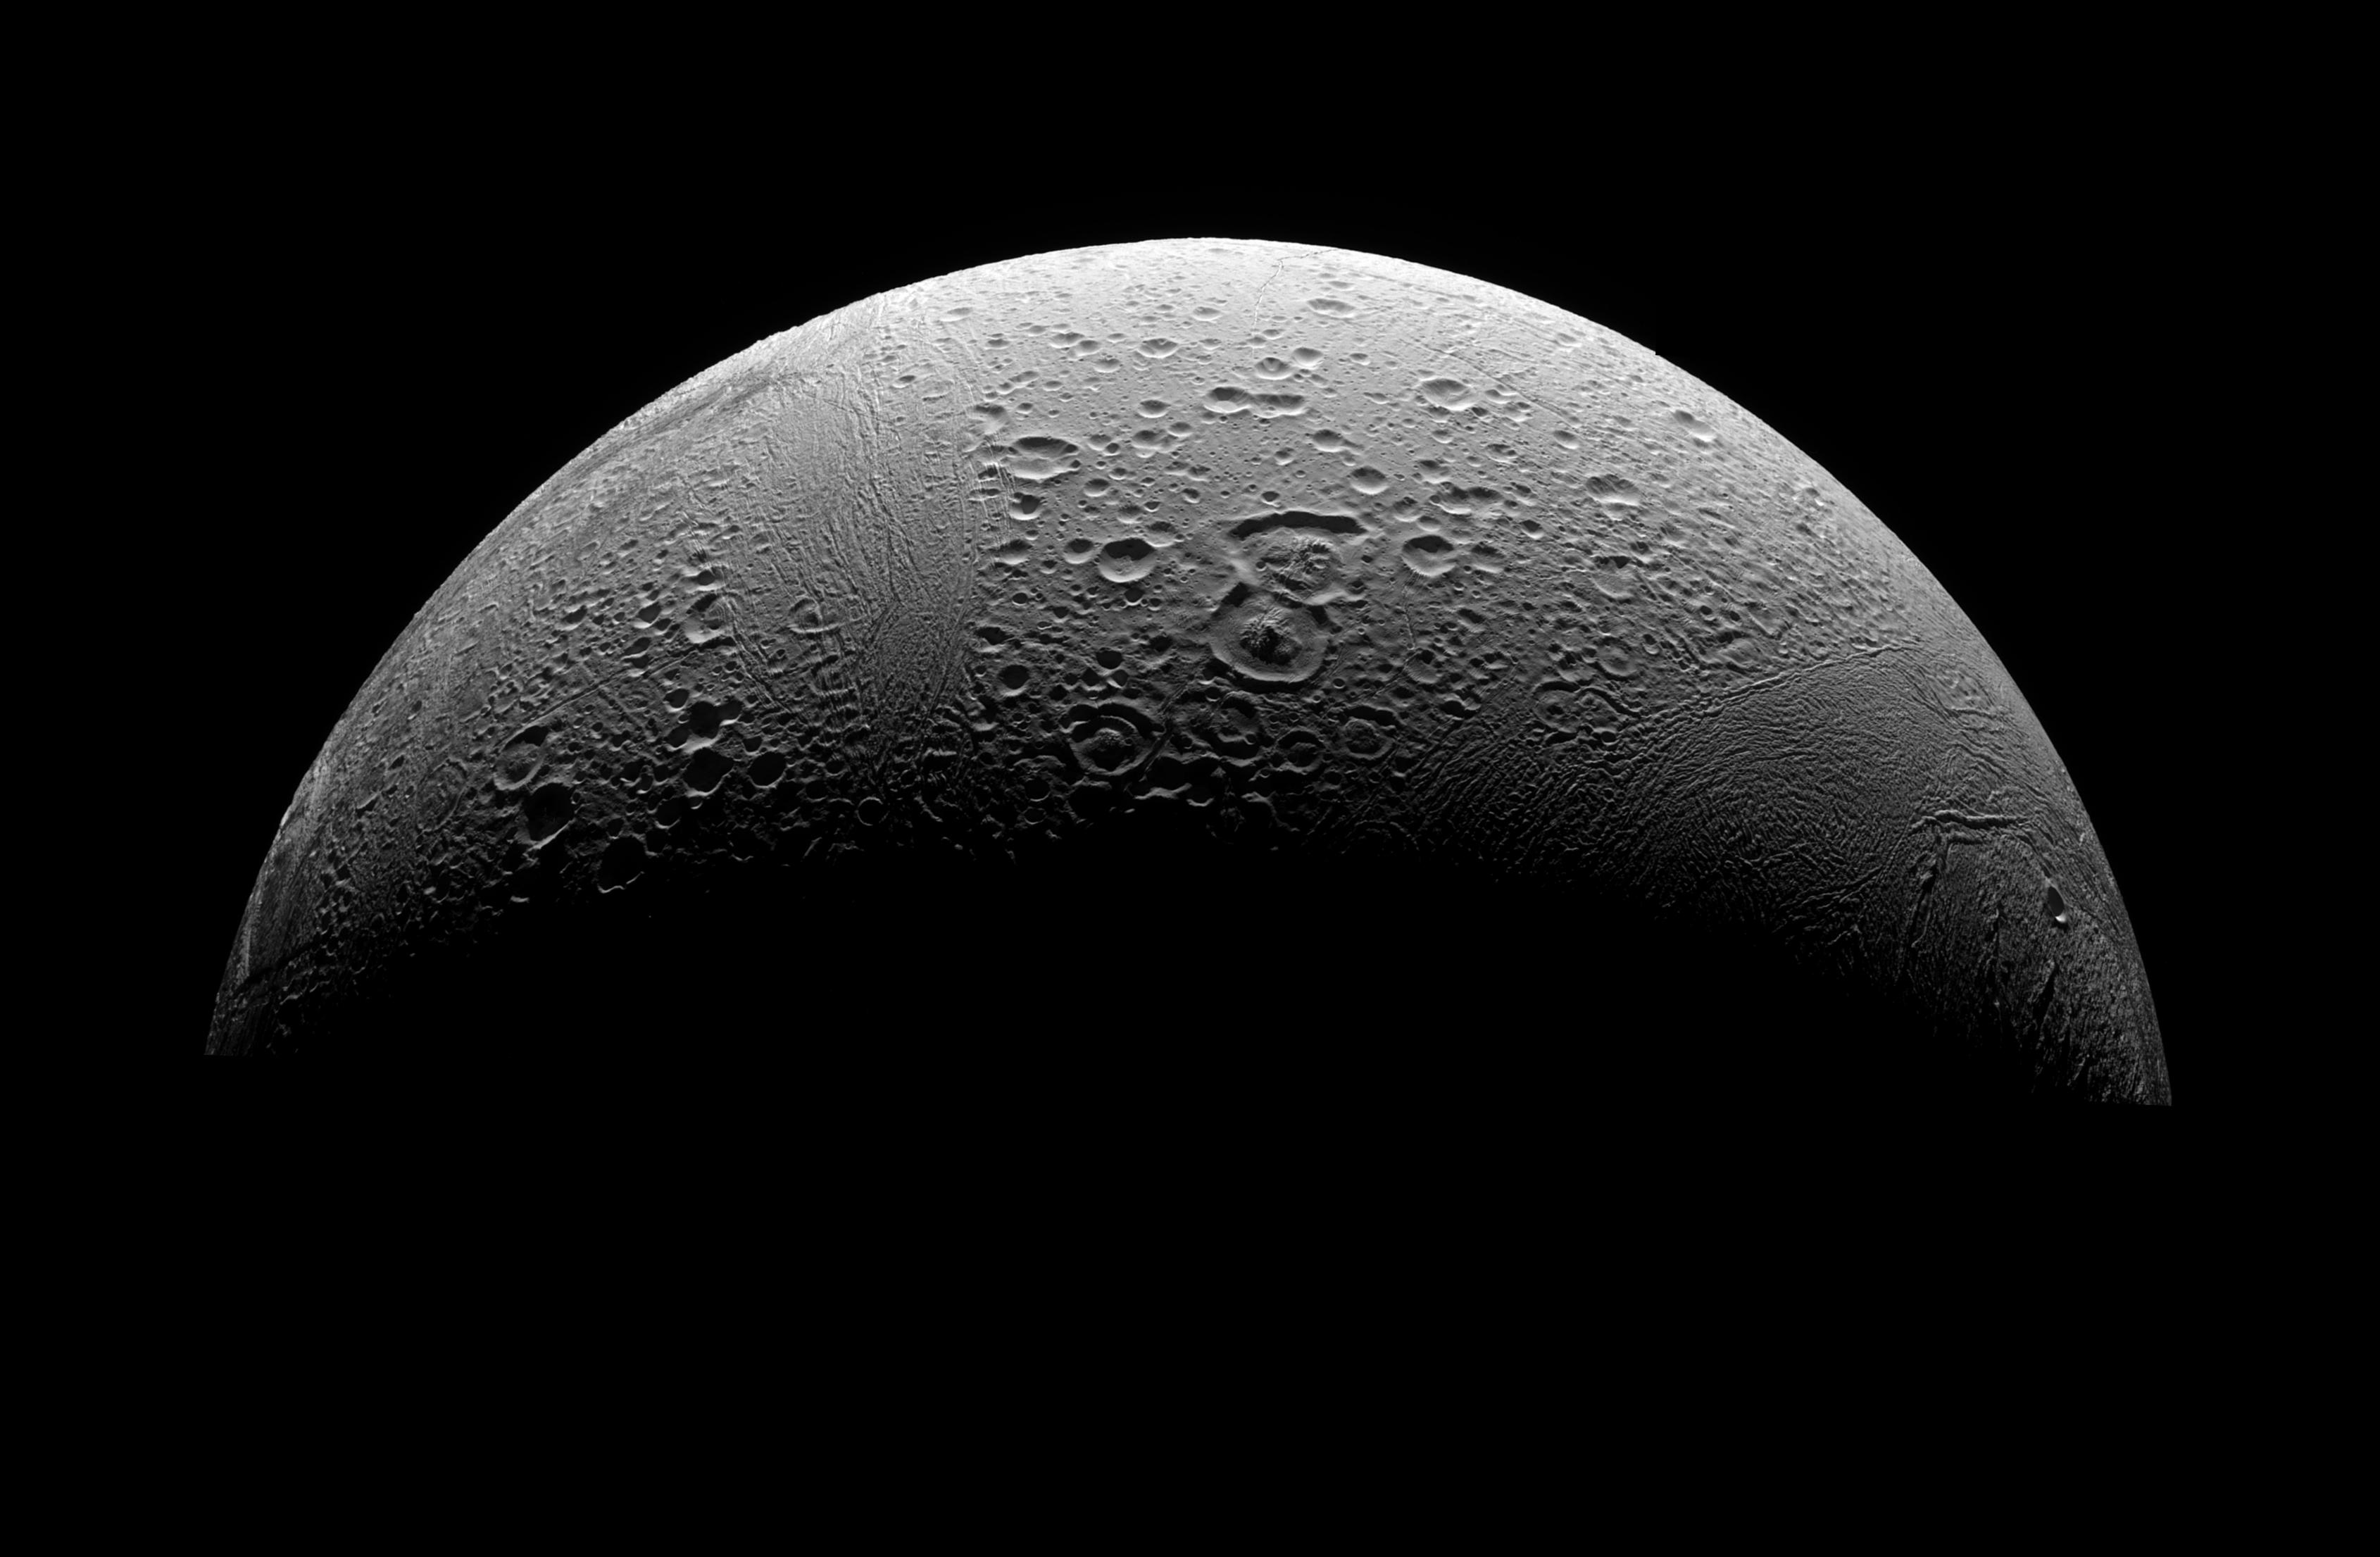 Enceladus’ north polar region